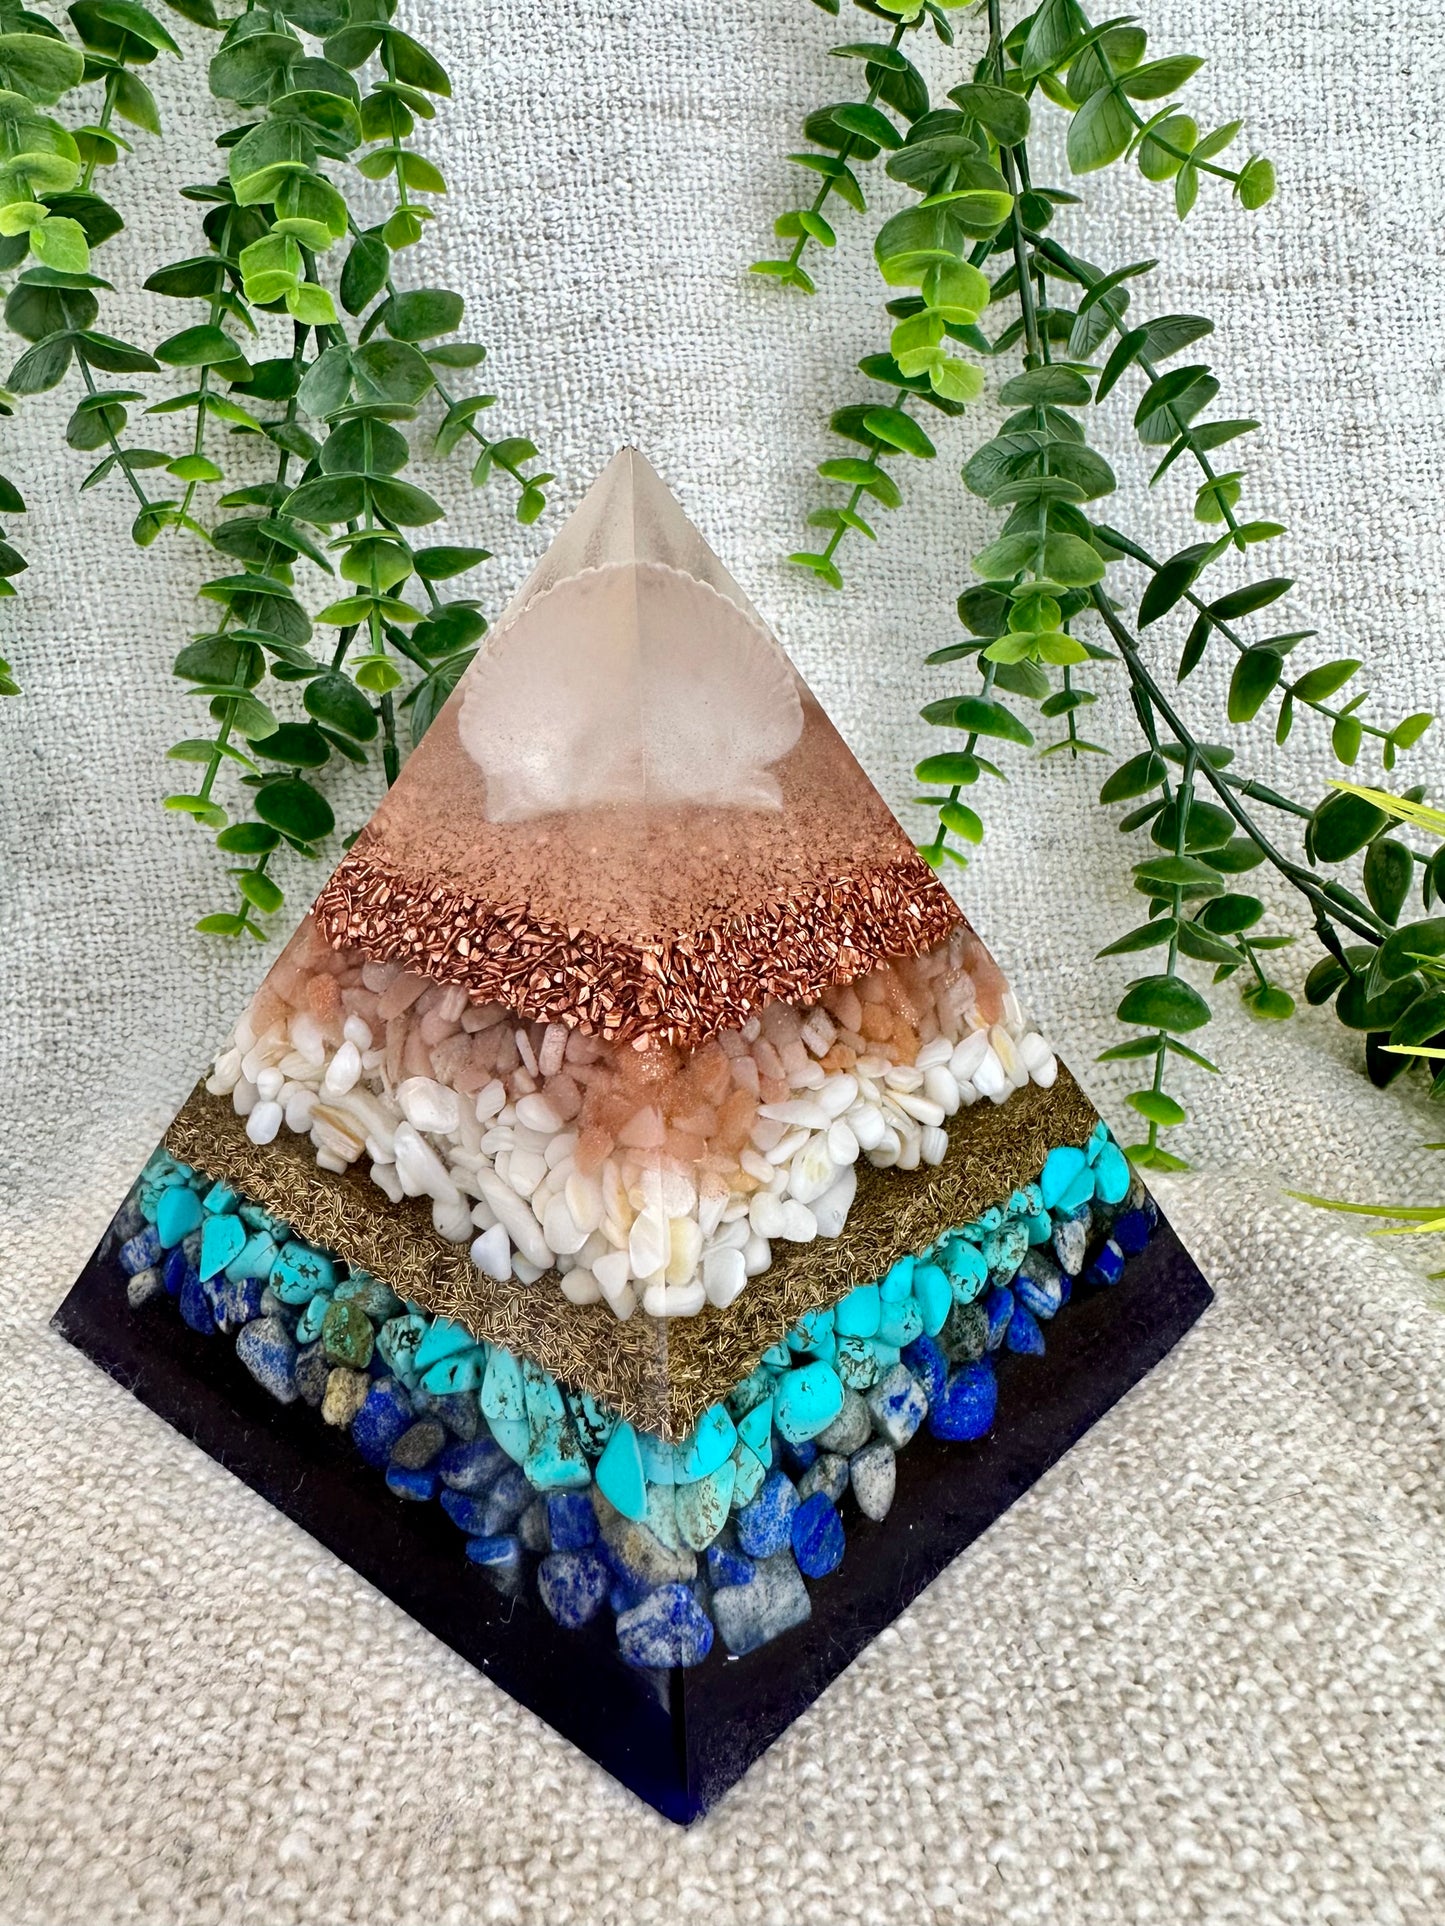 DORIS - Orgonite Pyramid - EMF Protector - Peach Moonstone, Sea Shells, Turquoise, Lapis Lazuli, with Copper and Brass Metals